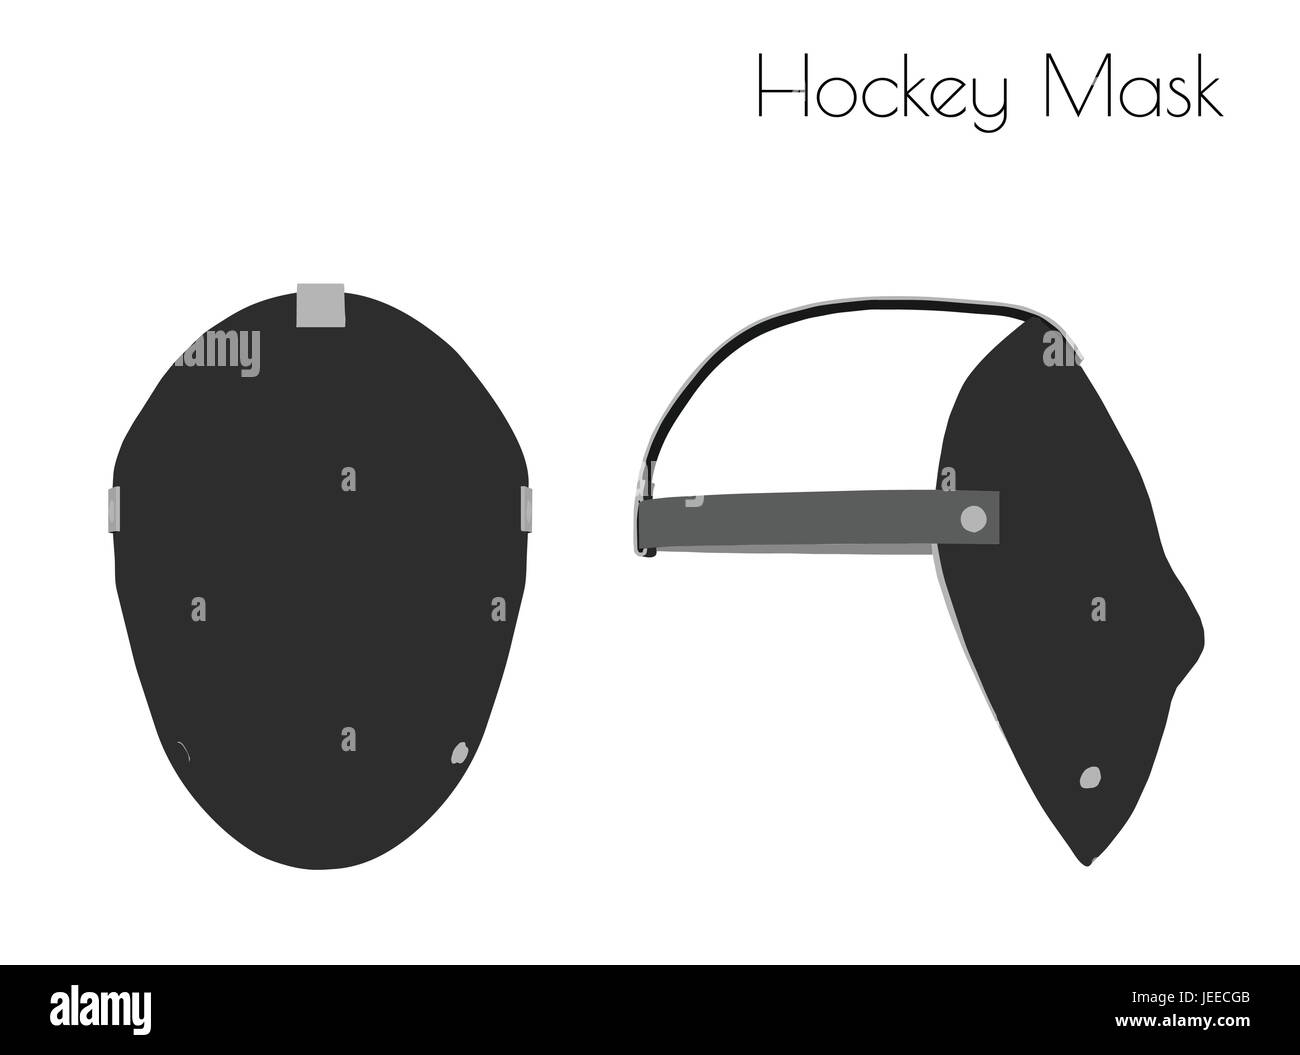 EPS 10 vector illustration of Hockey Mask silhouette on white background Stock Vector